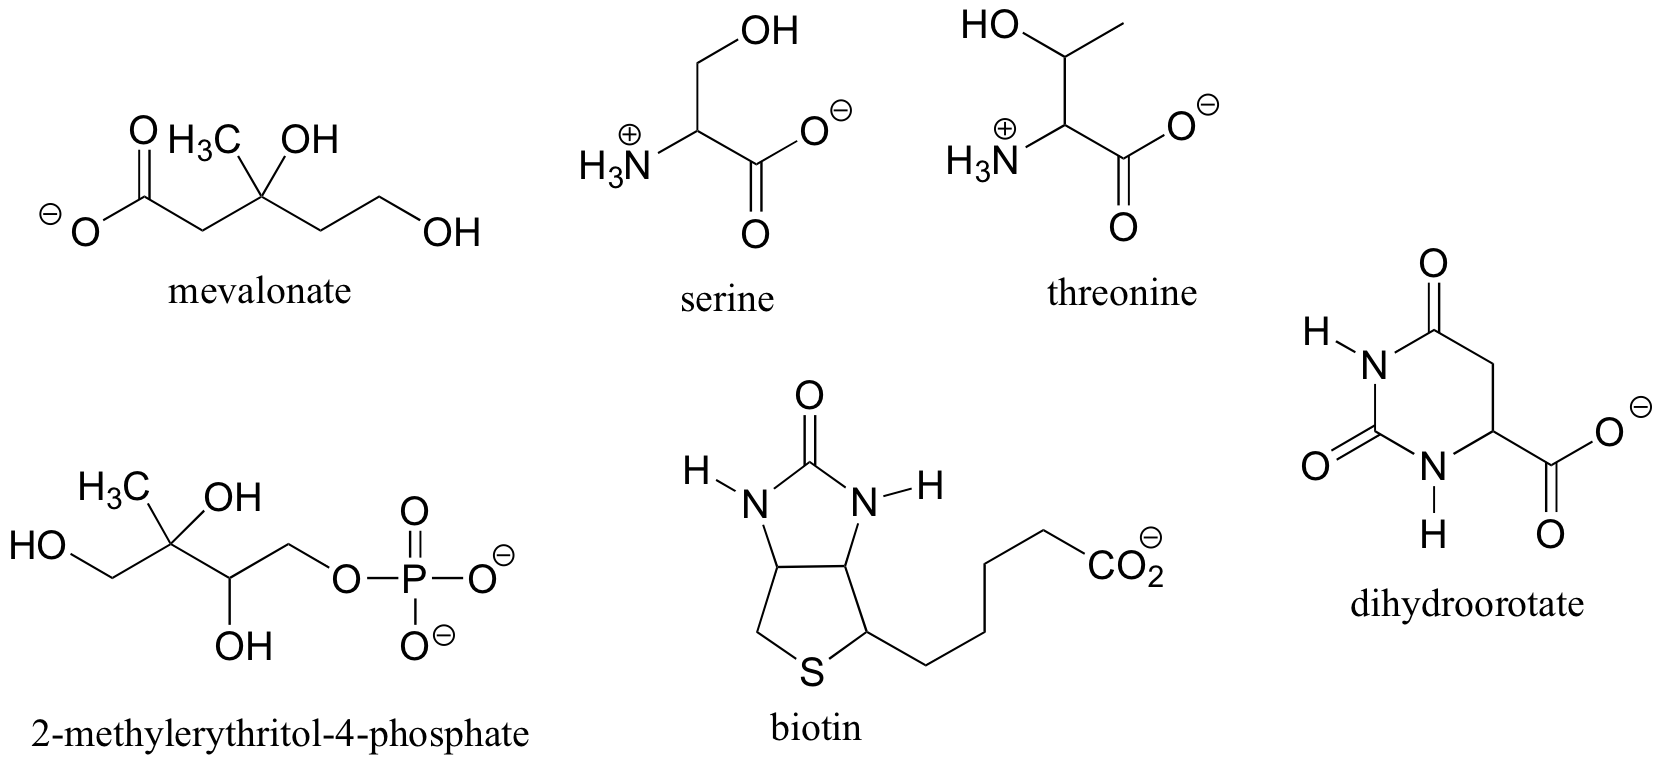 Chemical structures of mevalonate, serine, threonine, 2-methylerythritol-4-phosphate, biotin, and dihydroorotate.